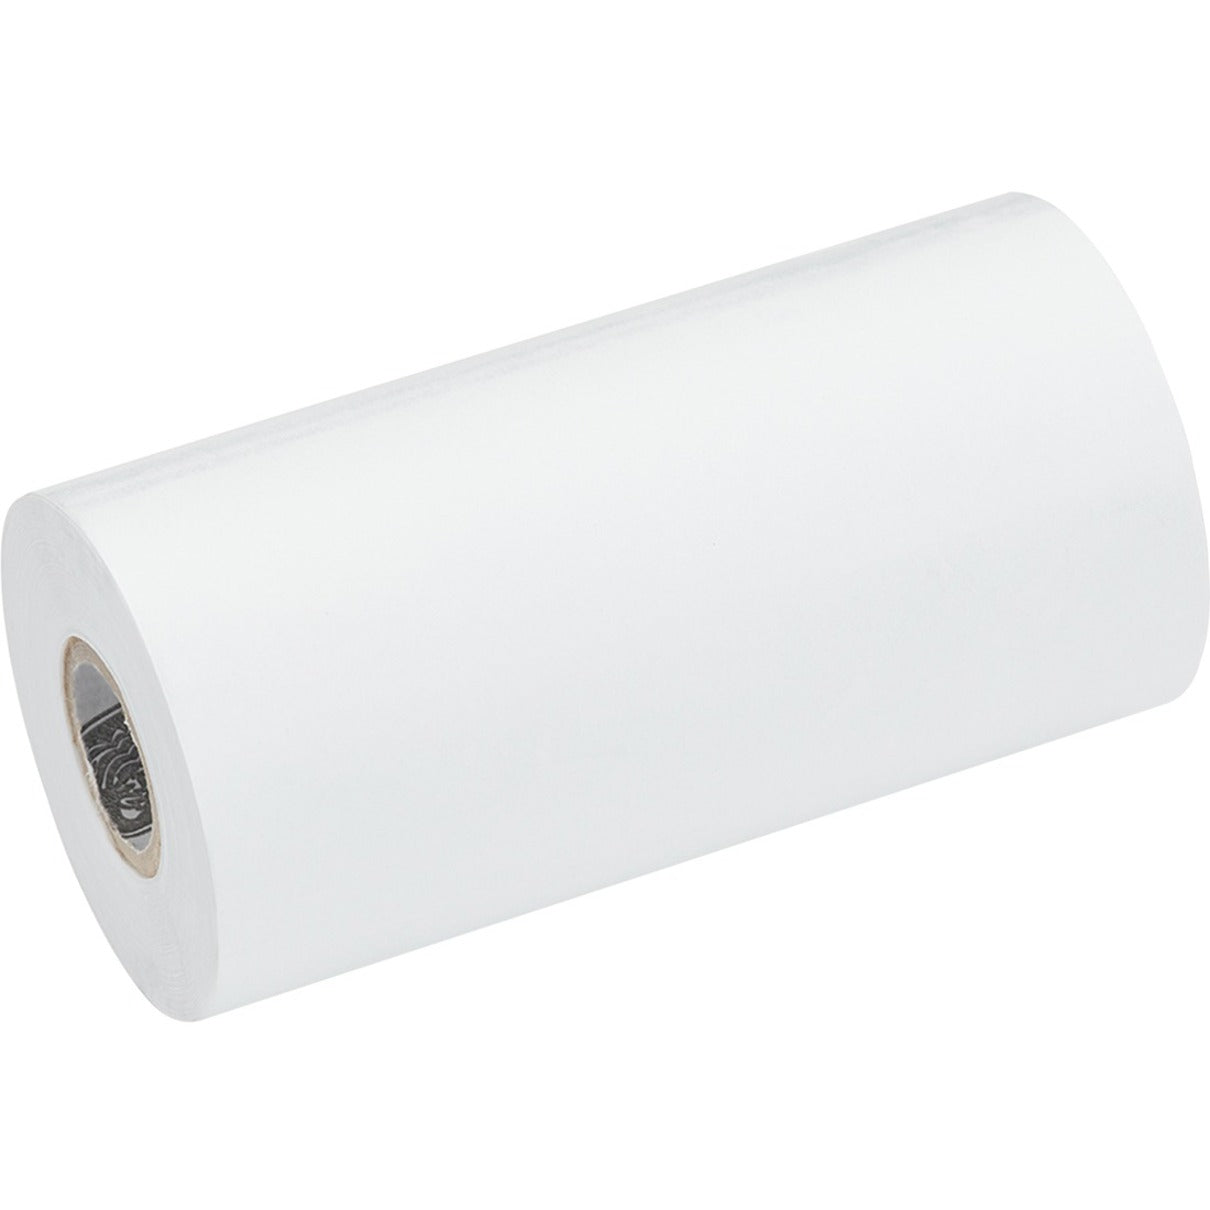 Zebra 10007008 Standard Thermal Paper Roll, 3 5/32" x 645 ft - 1 Pack